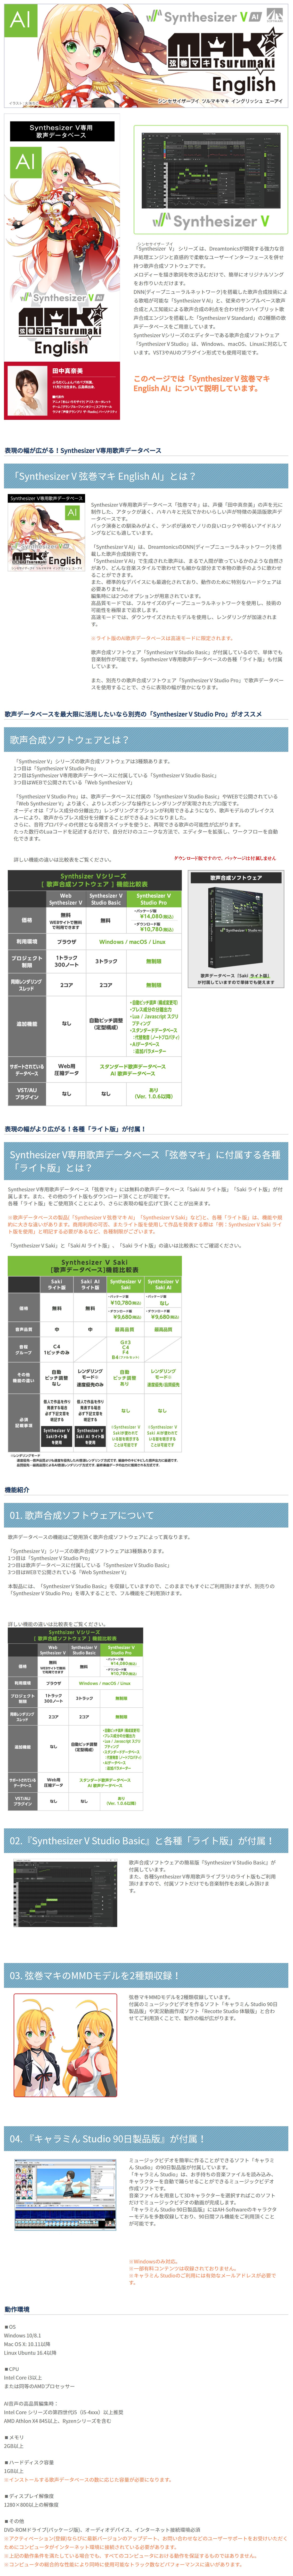 Synthesizer V 弦巻マキ English ダウンロード版